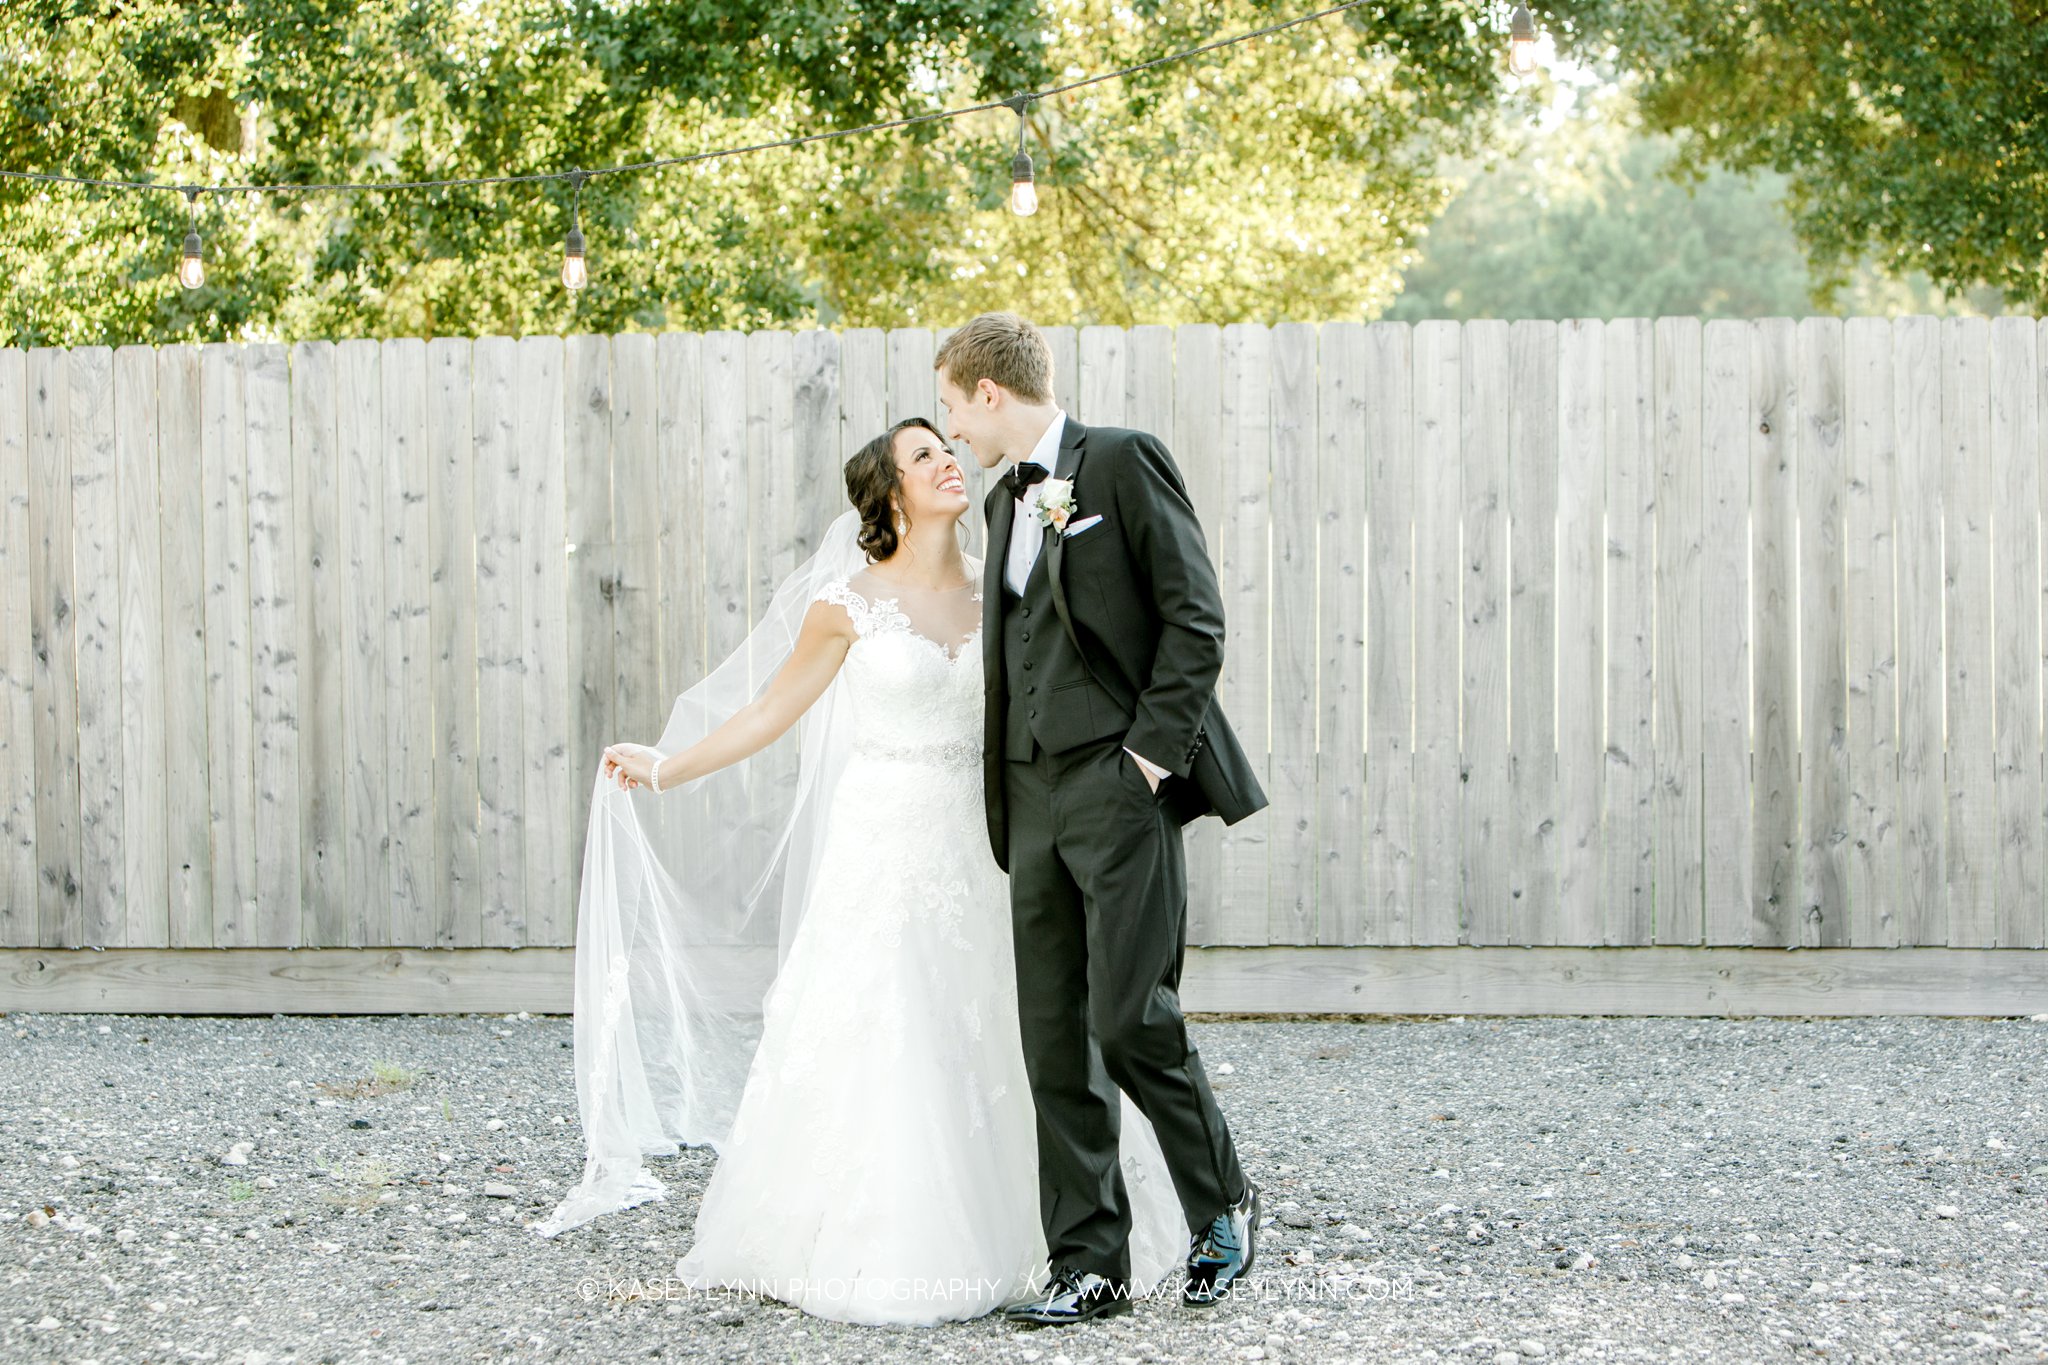 kingwood wedding photographer / Kasey Lynn Photography